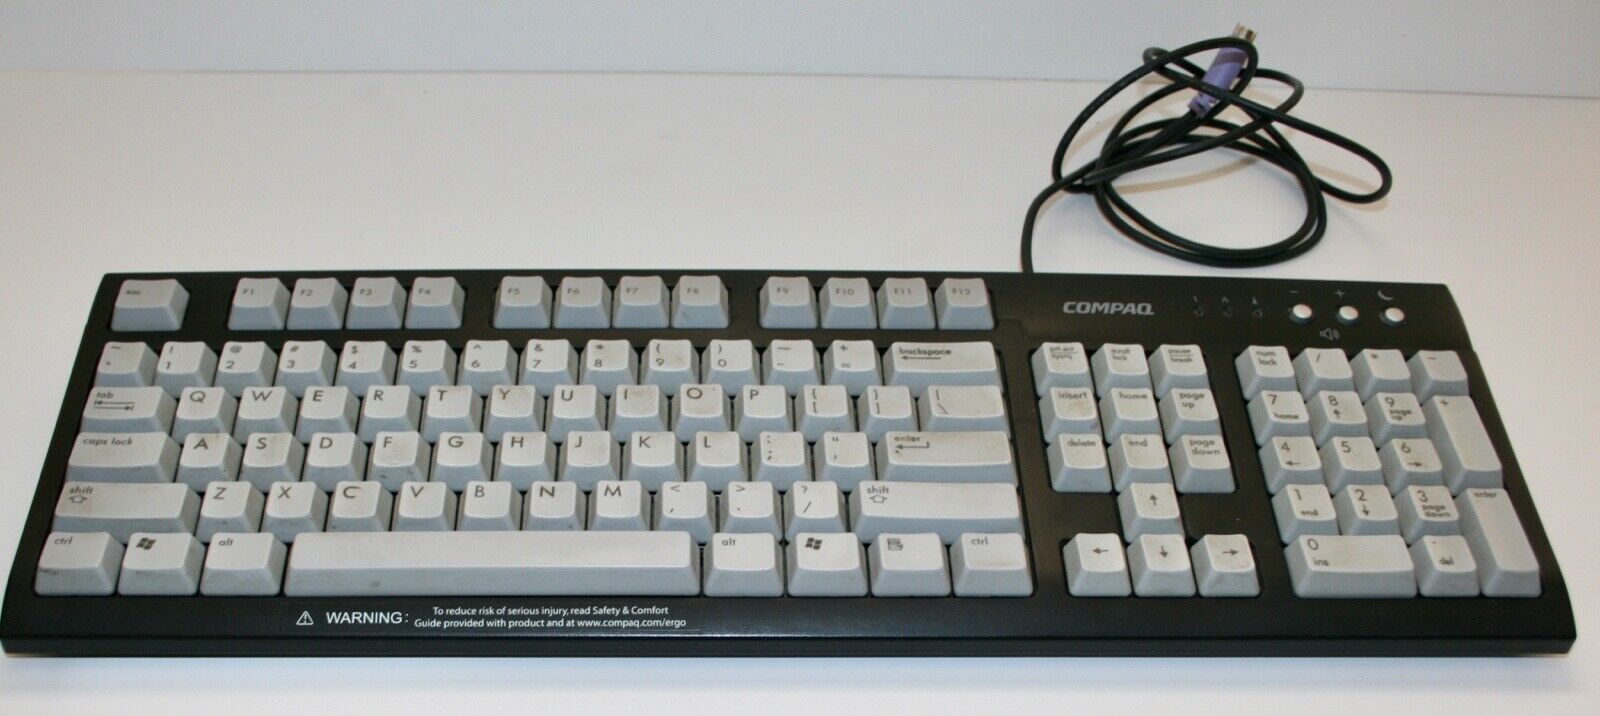 Compaq Keyboard Black with Gray Keys Mechanical Clicky Model 5107 